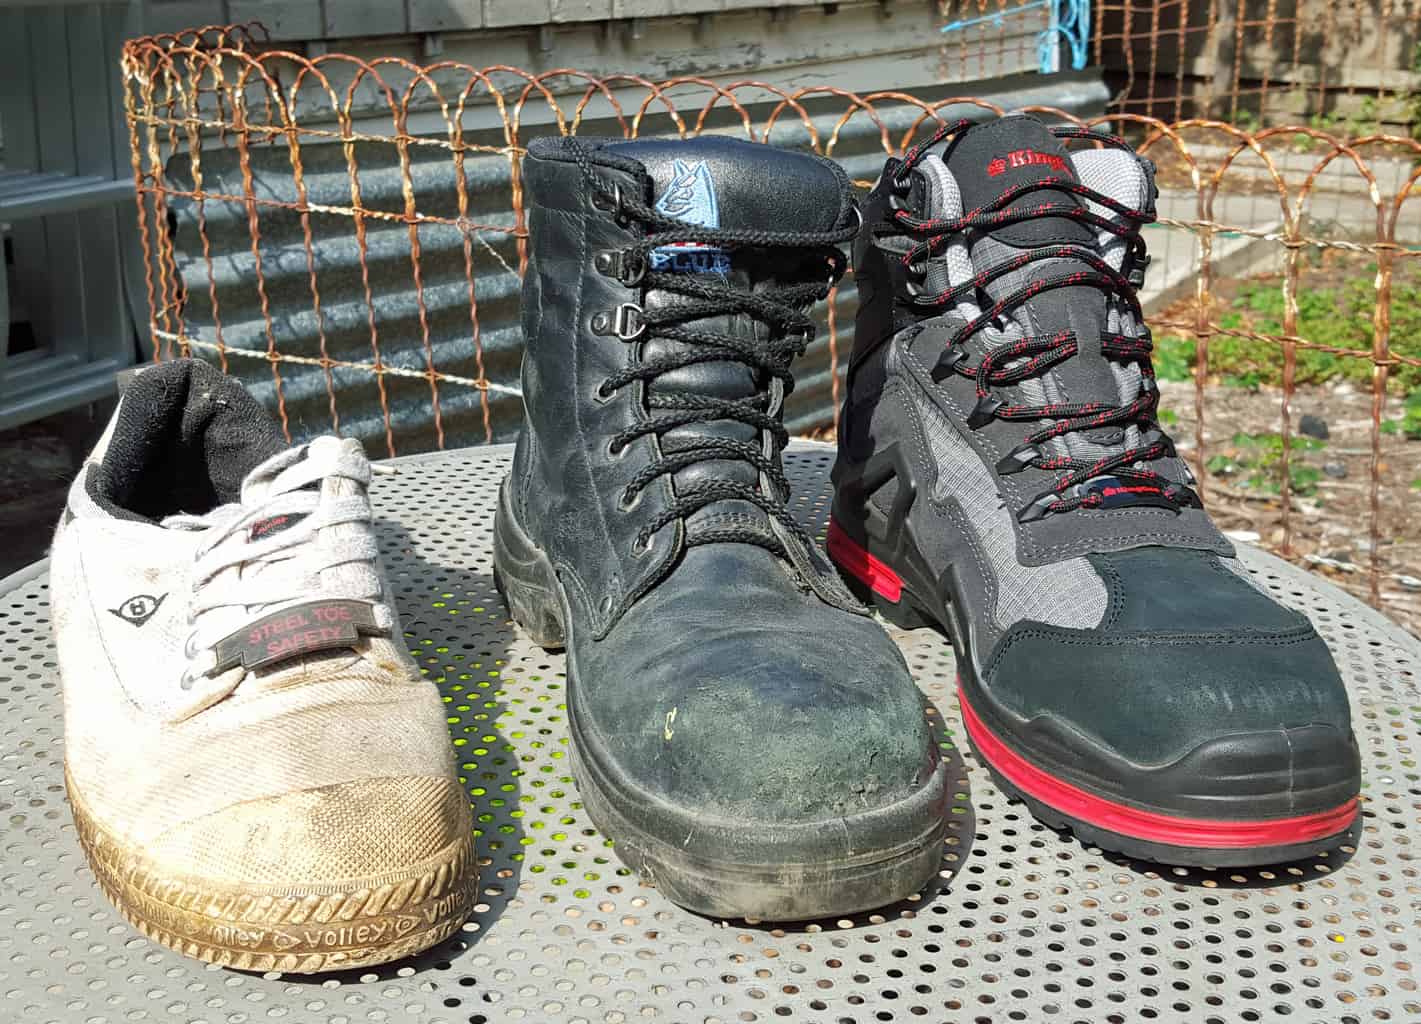 Safety footwear needs more safety research – SafetyAtWorkBlog